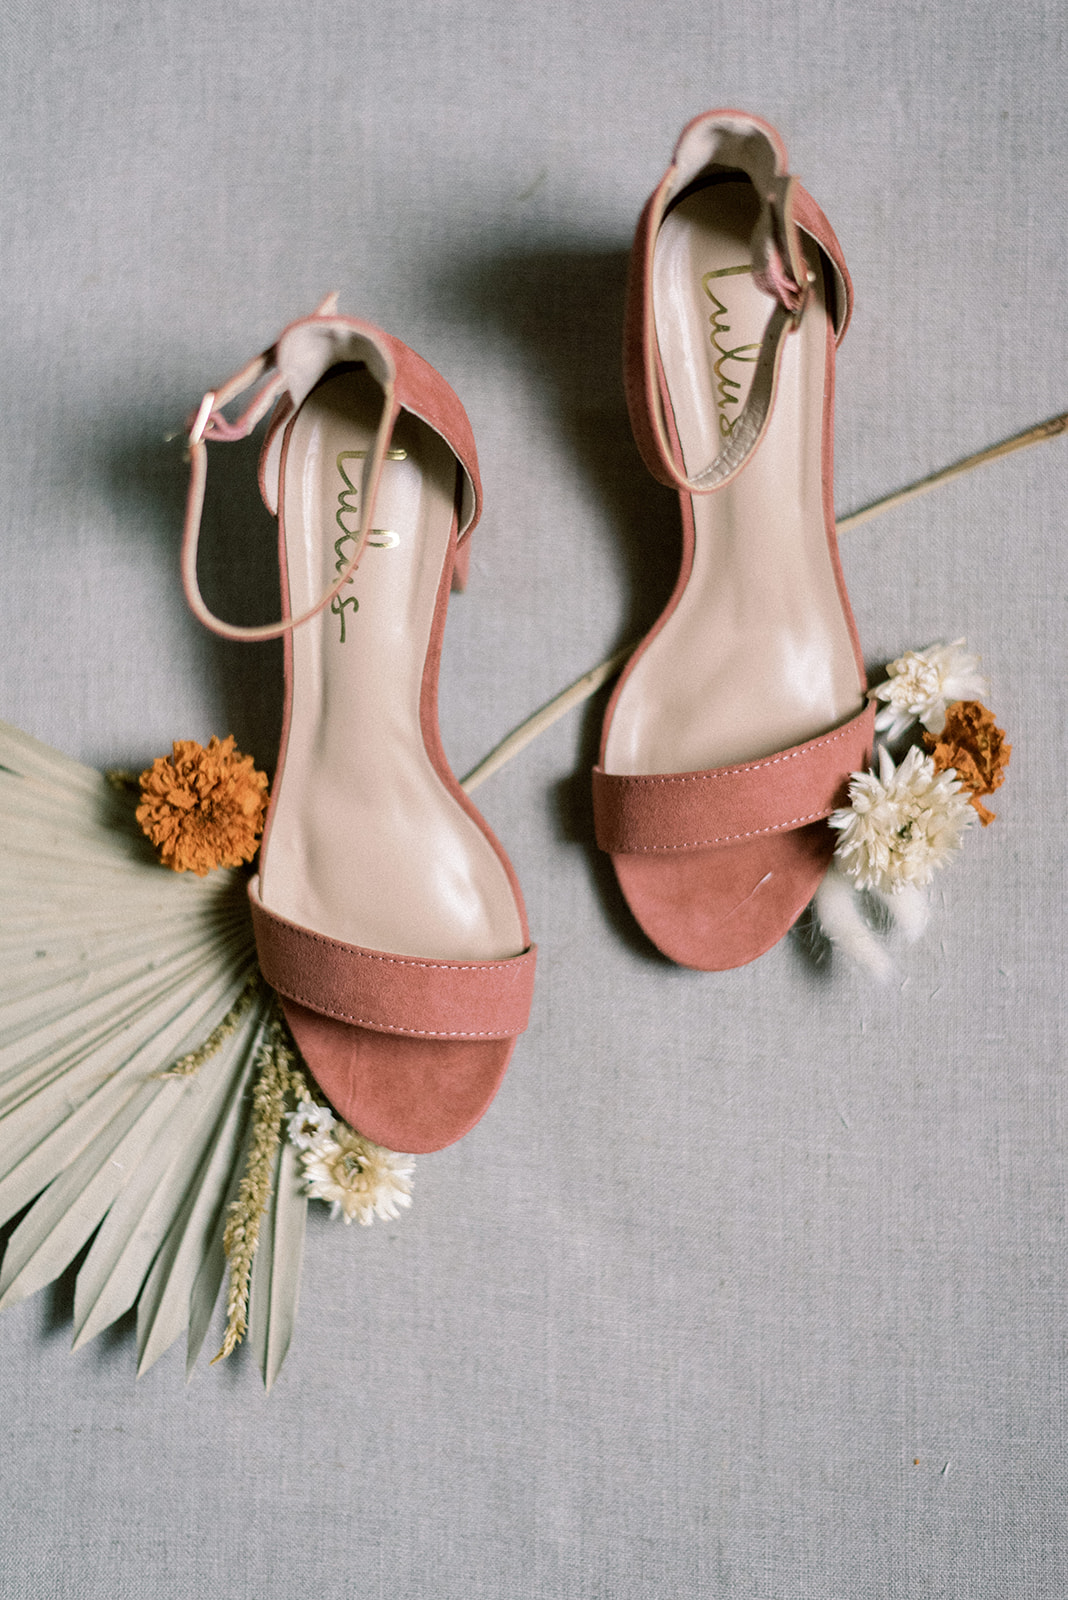 Pennsylvania wedding photographer captures bridal wedding shoes